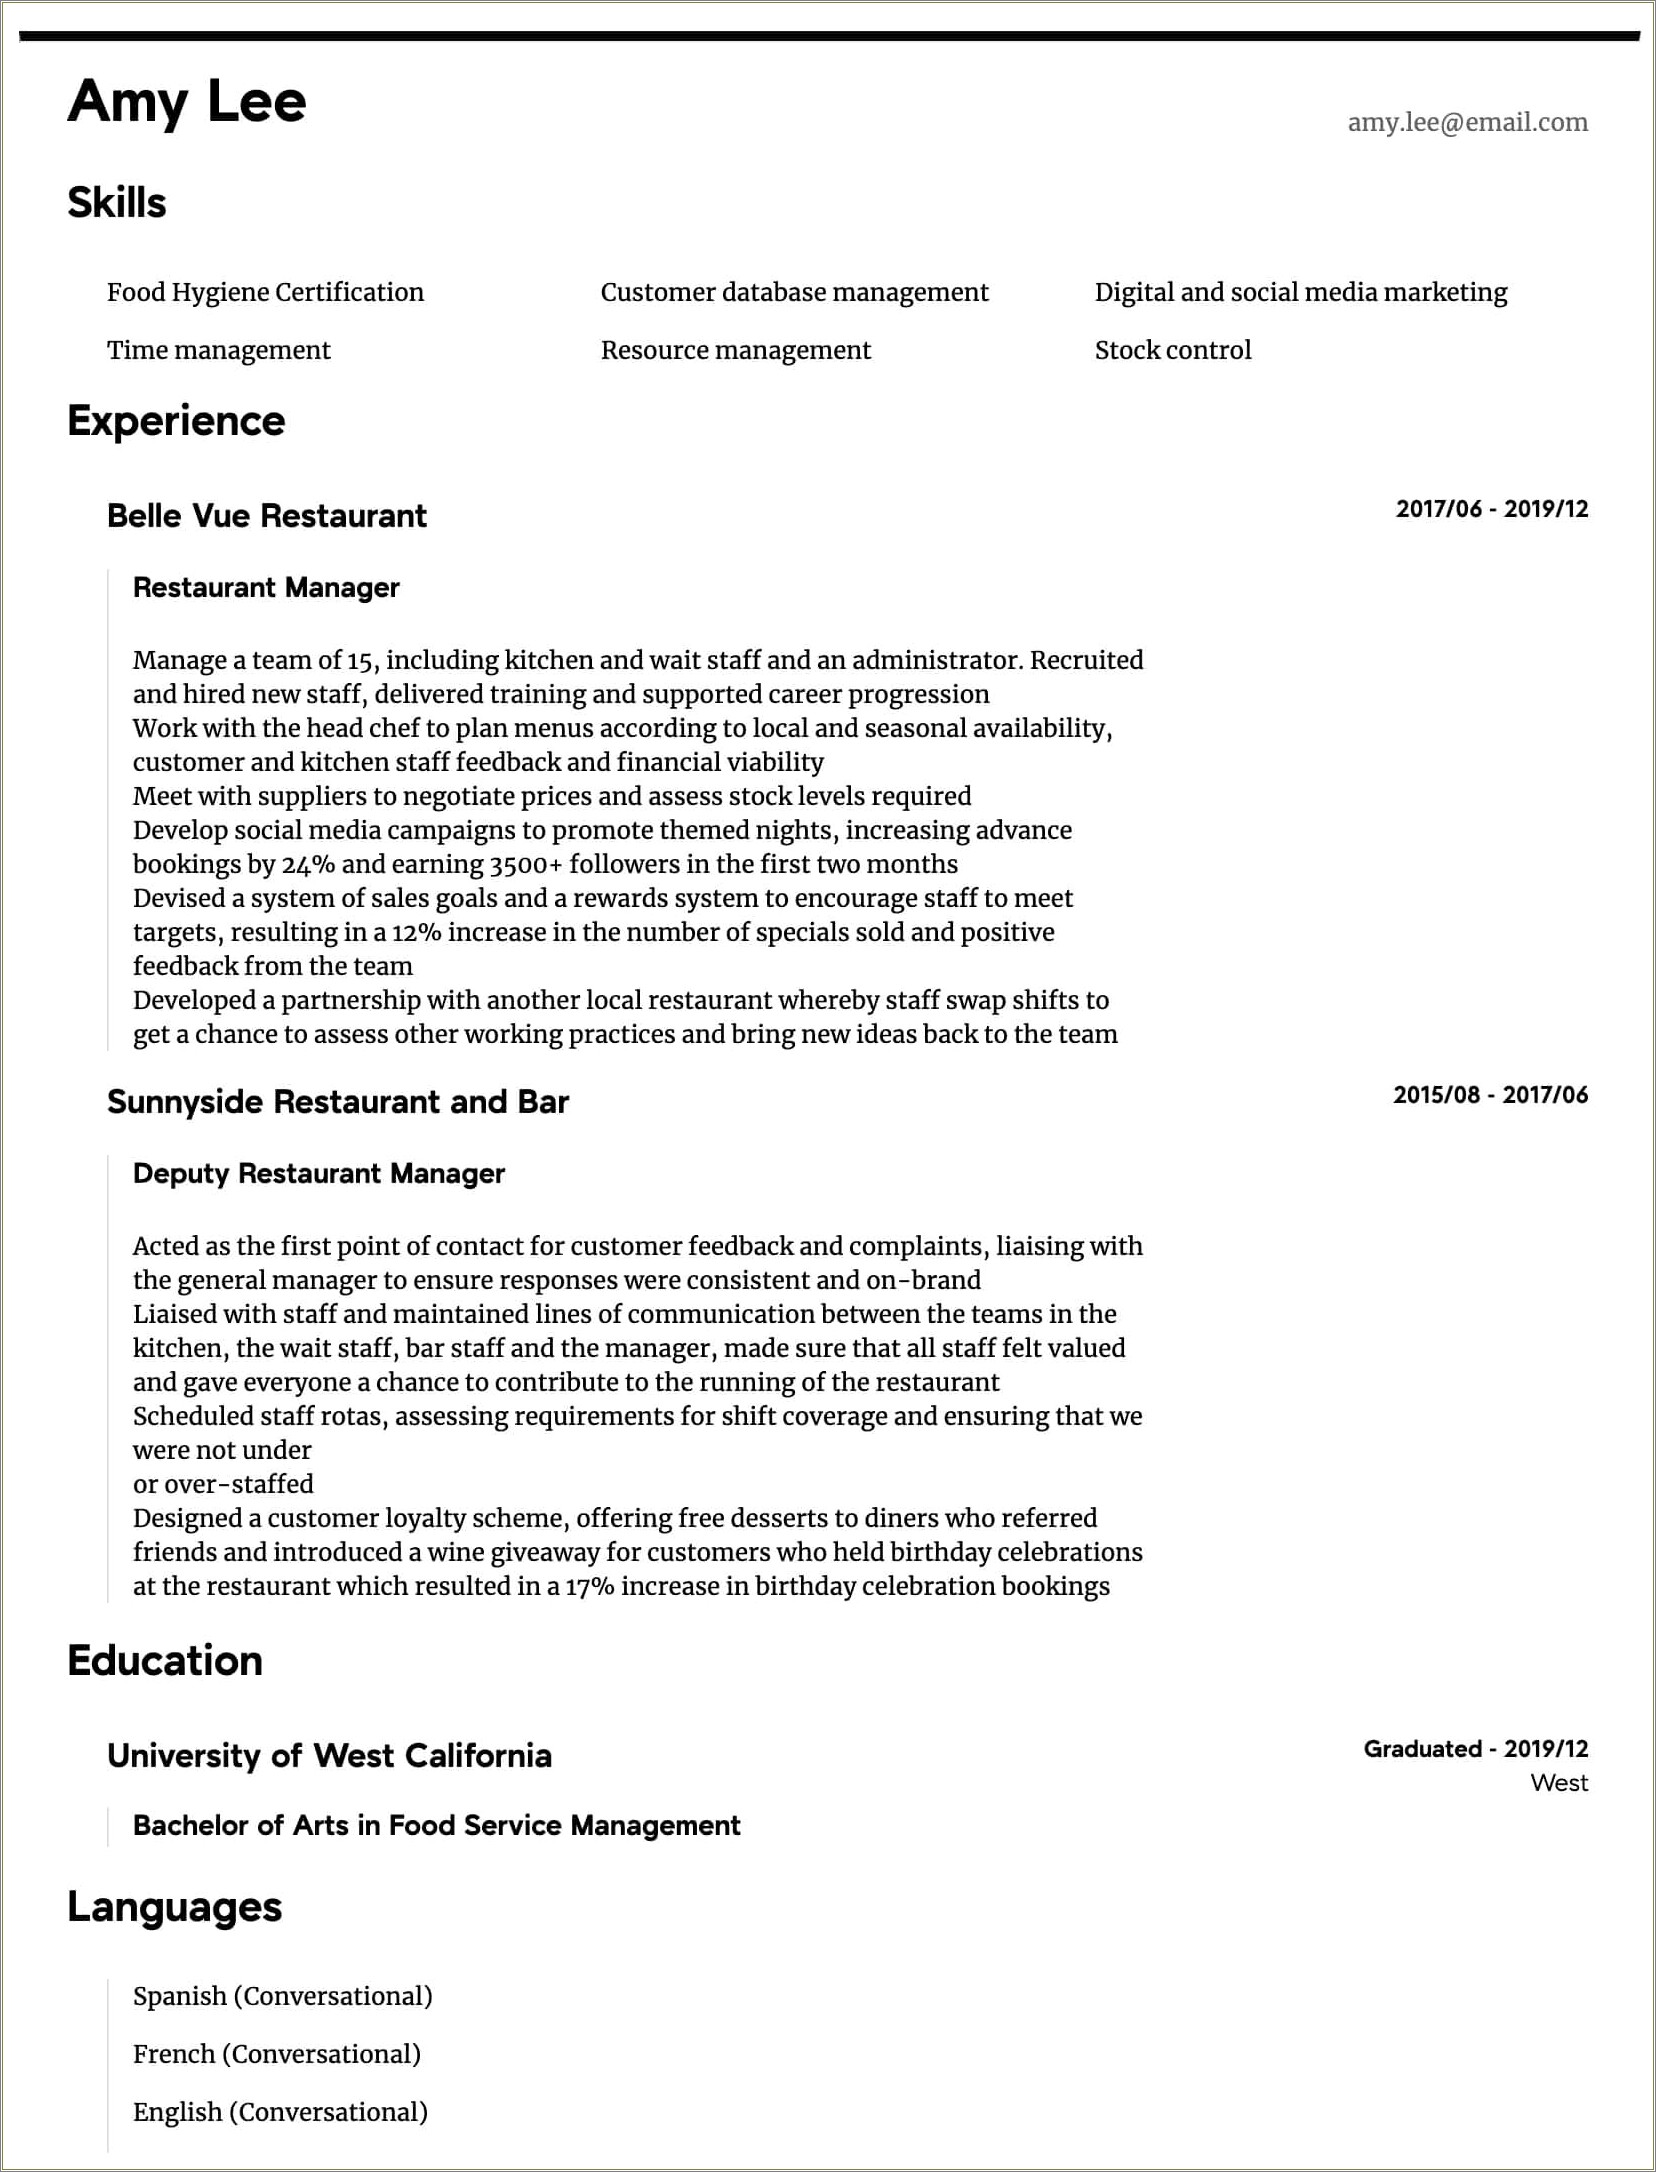 Job Description For Restaurant Manager Resume